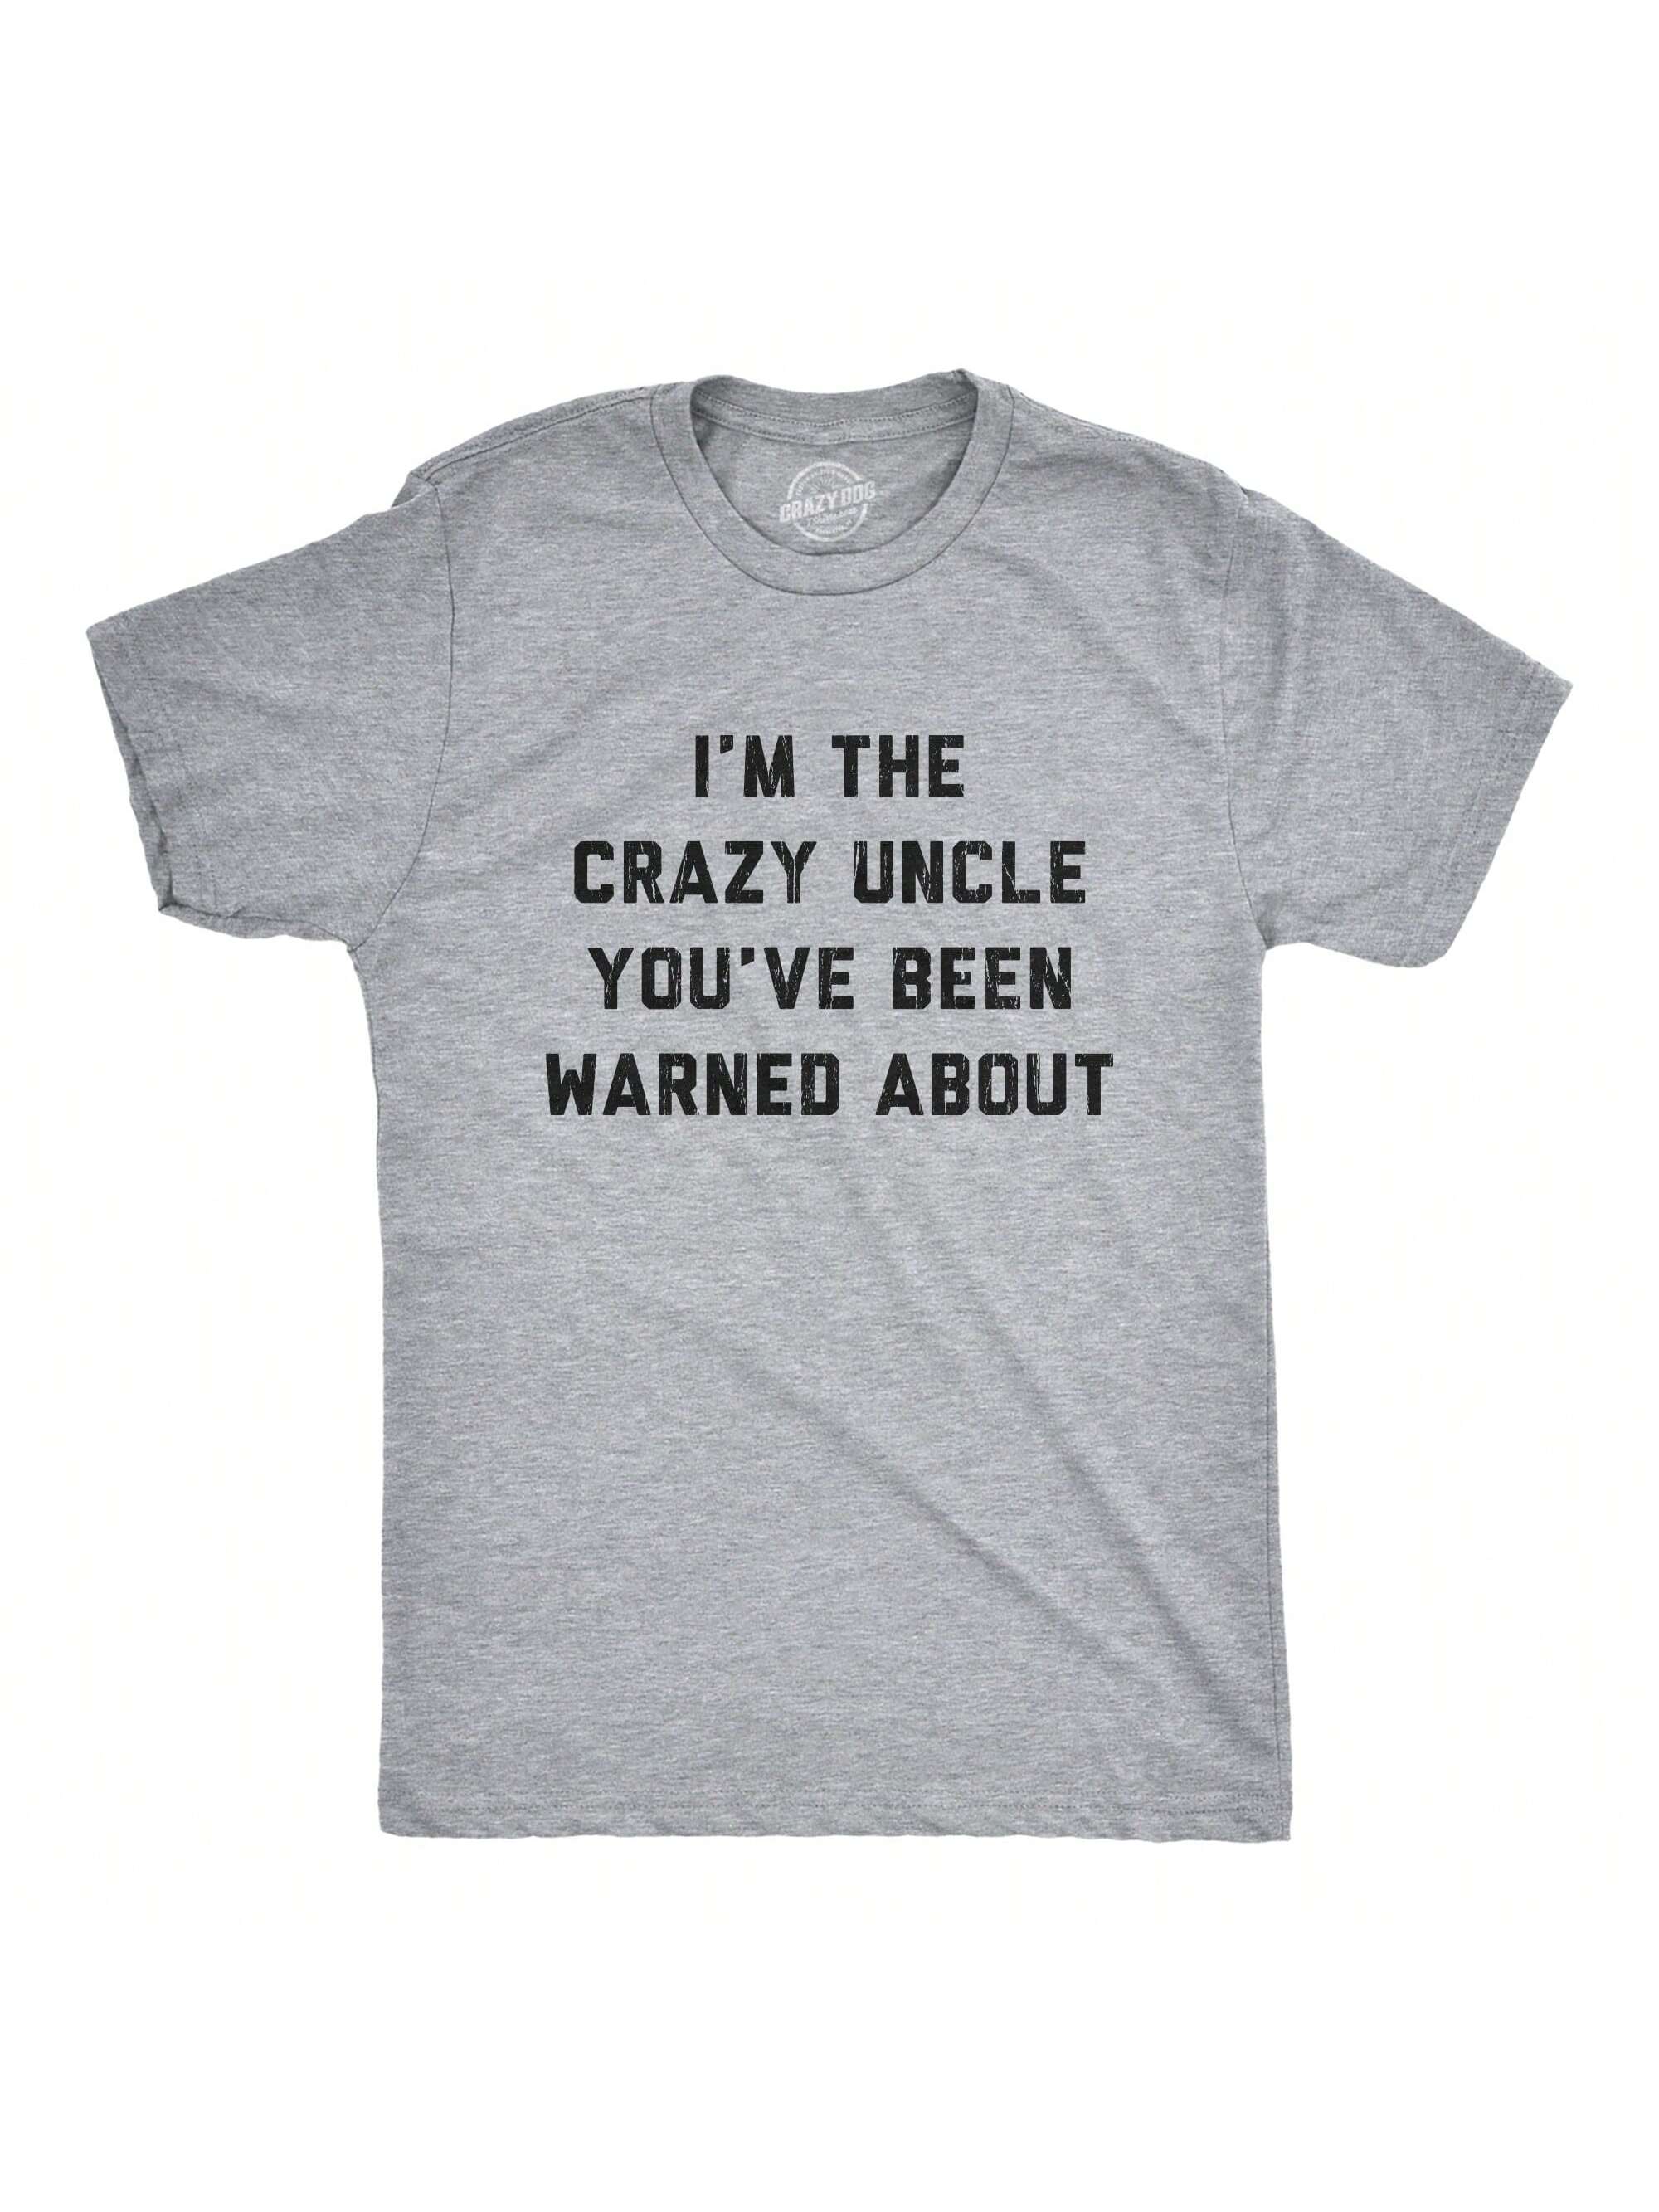 Мужская футболка «Они не мои» «Я дядя», светлый хизер грей - сумасшедший дядя хизер